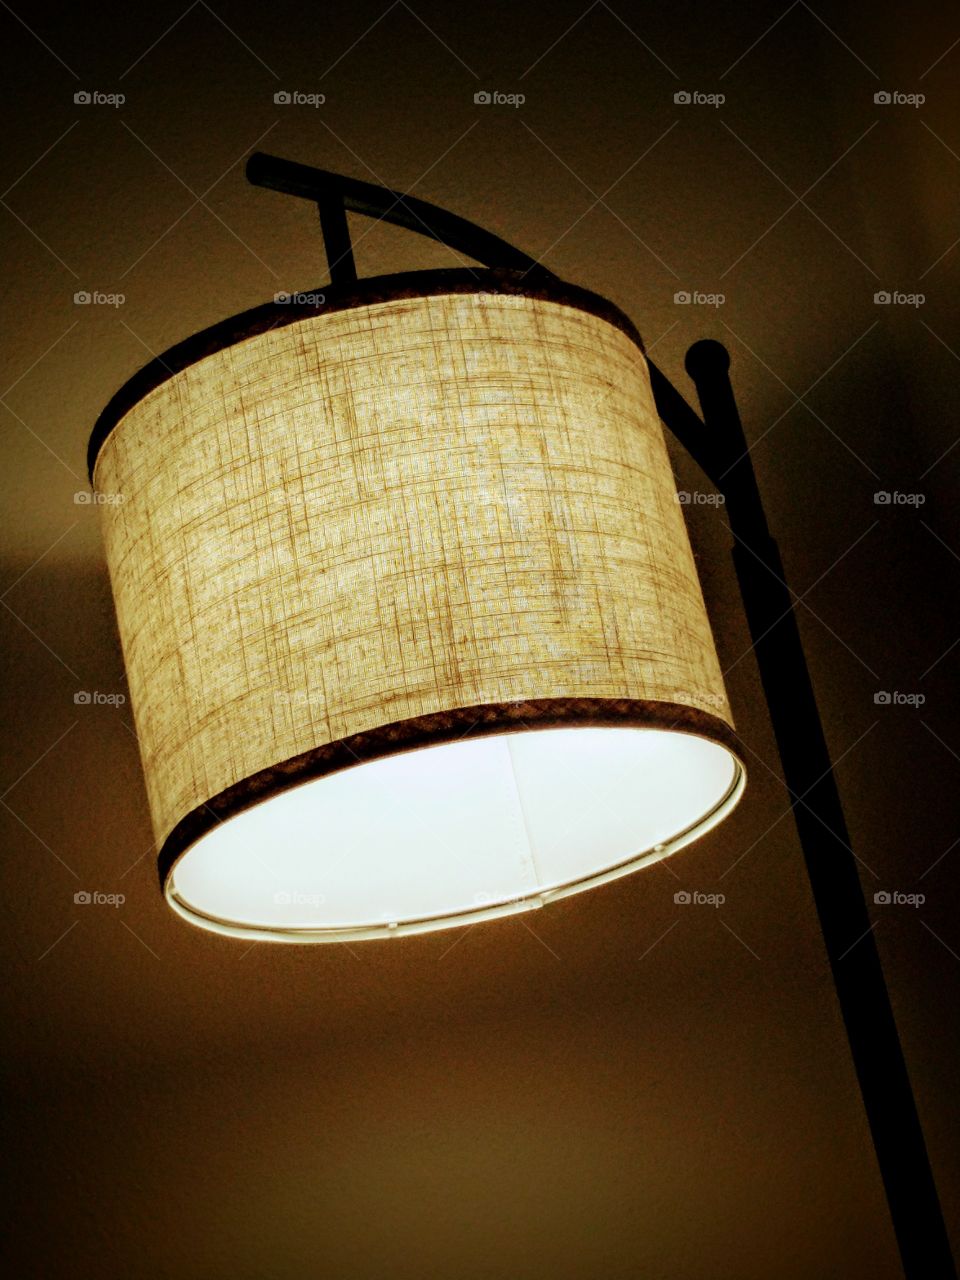 Lit lamp